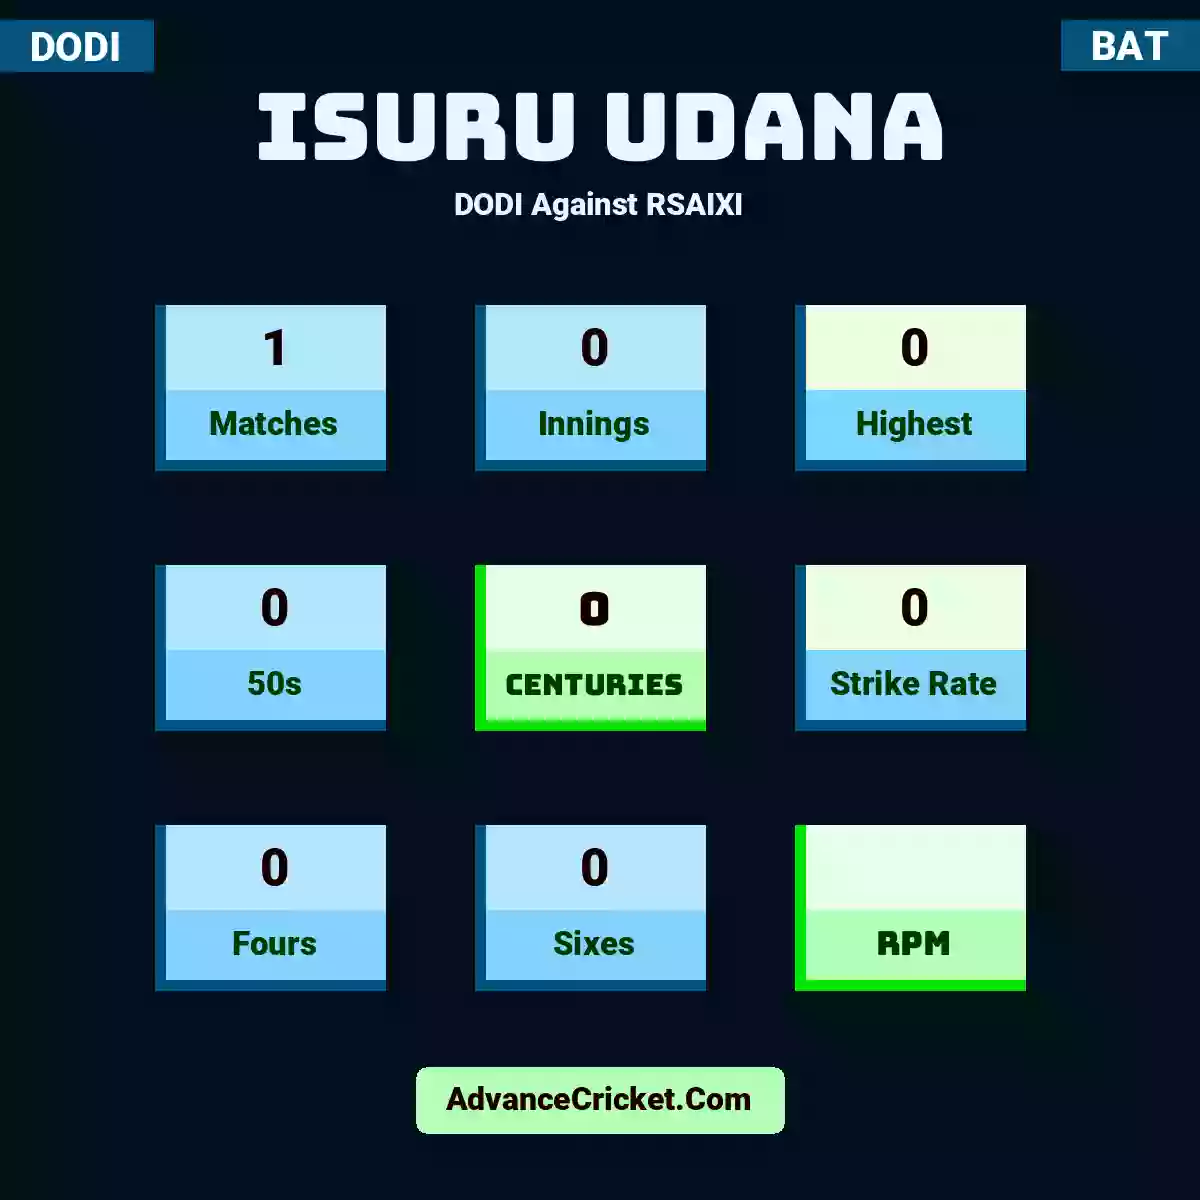 Isuru Udana DODI  Against RSAIXI, Isuru Udana played 1 matches, scored 0 runs as highest, 0 half-centuries, and 0 centuries, with a strike rate of 0. I.Udana hit 0 fours and 0 sixes.